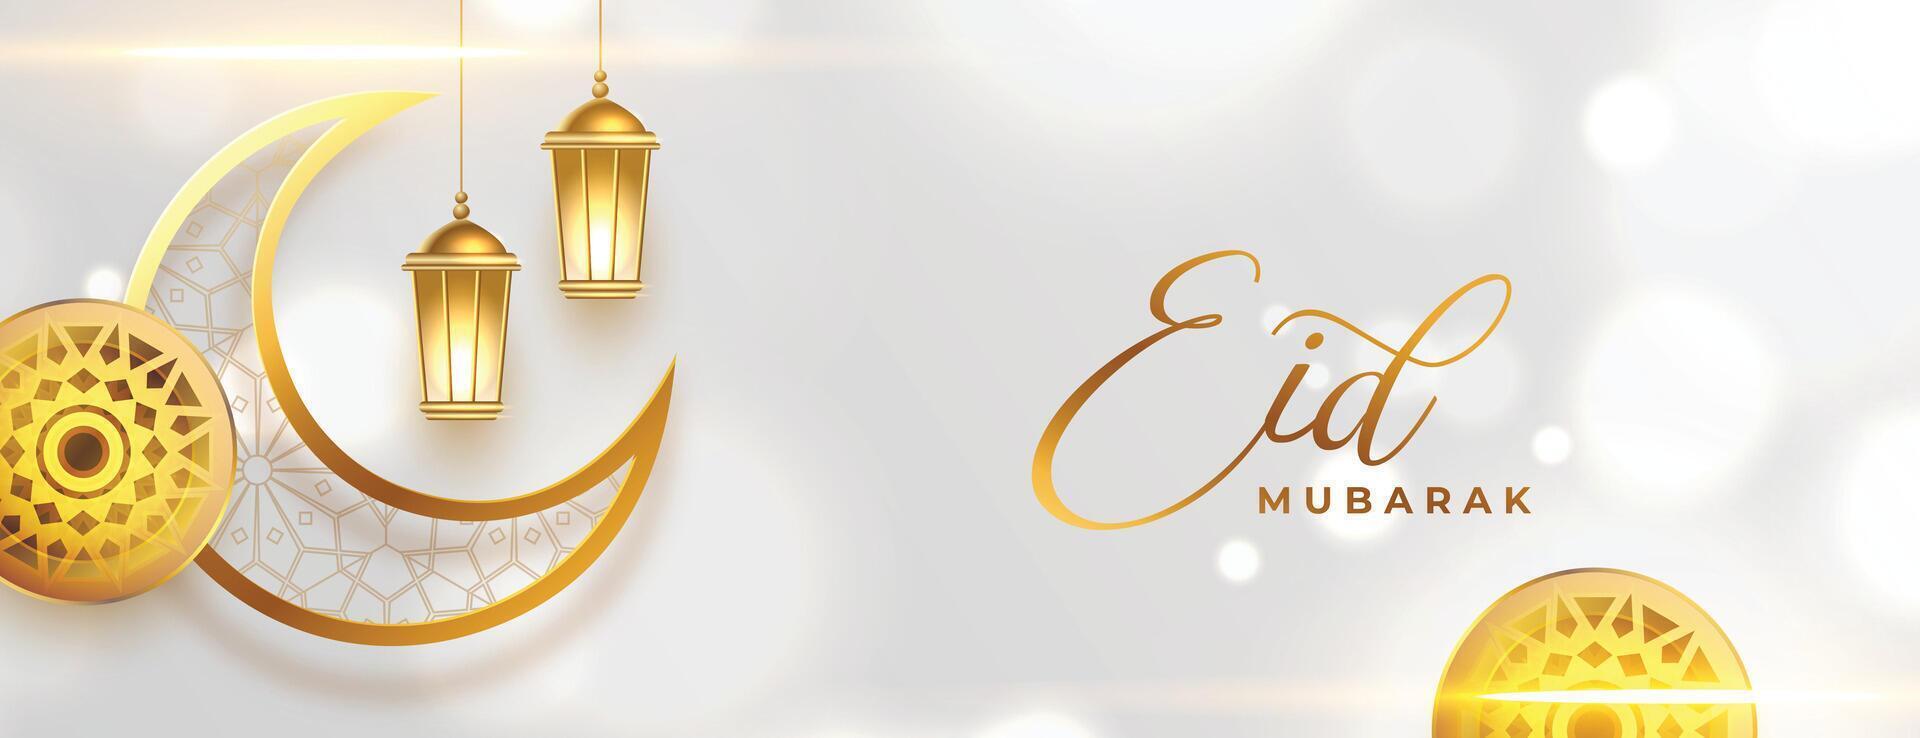 shiny eid mubarak islamic banner with golden moon and lamp vector